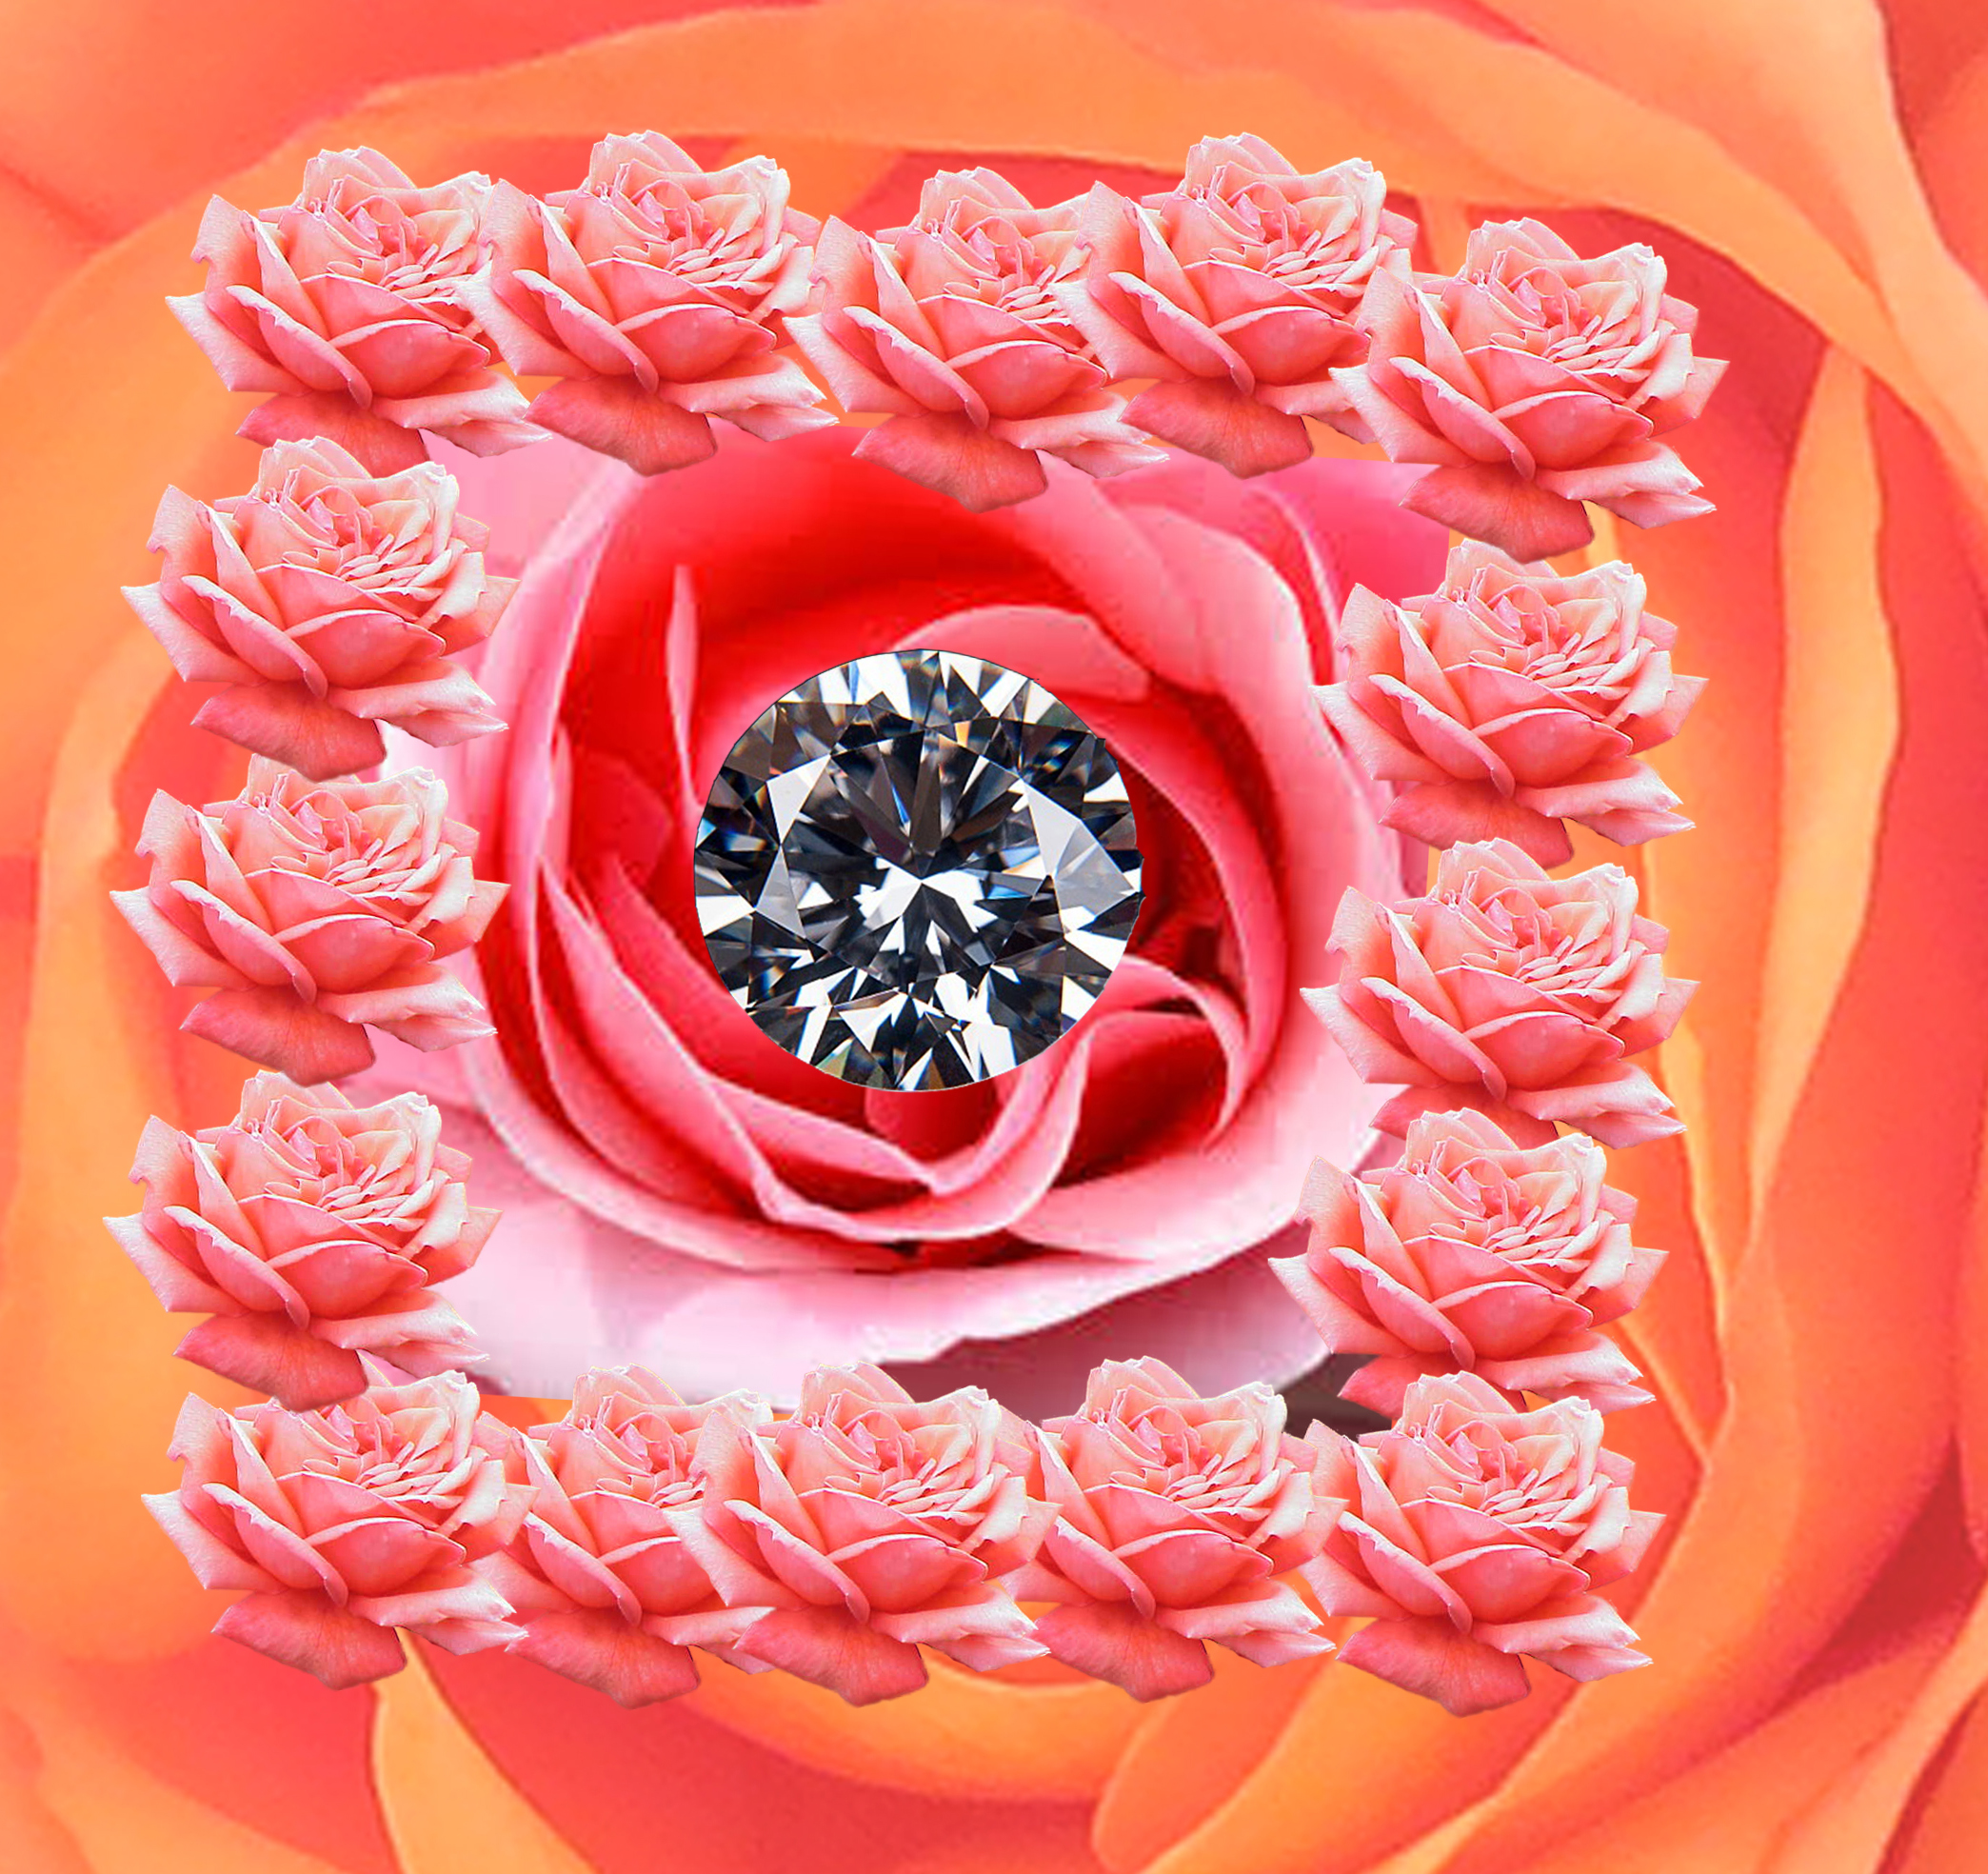 Diamond in my rose